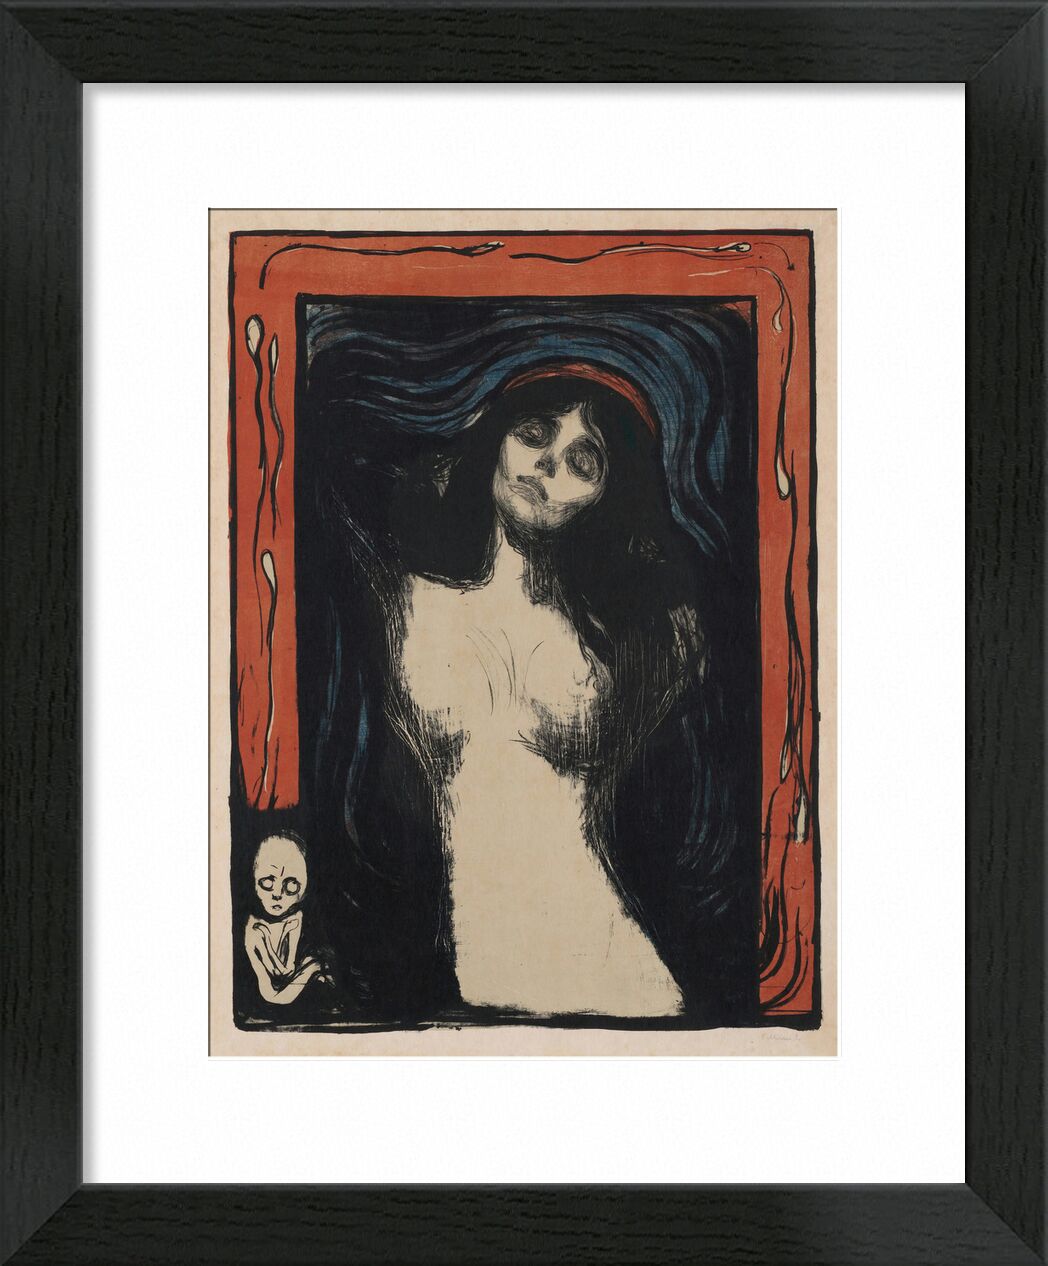 Madonna II - Edvard Munch desde Bellas artes, Prodi Art, Edvard Munch, desnudo, mujer, dibujo, embarazo